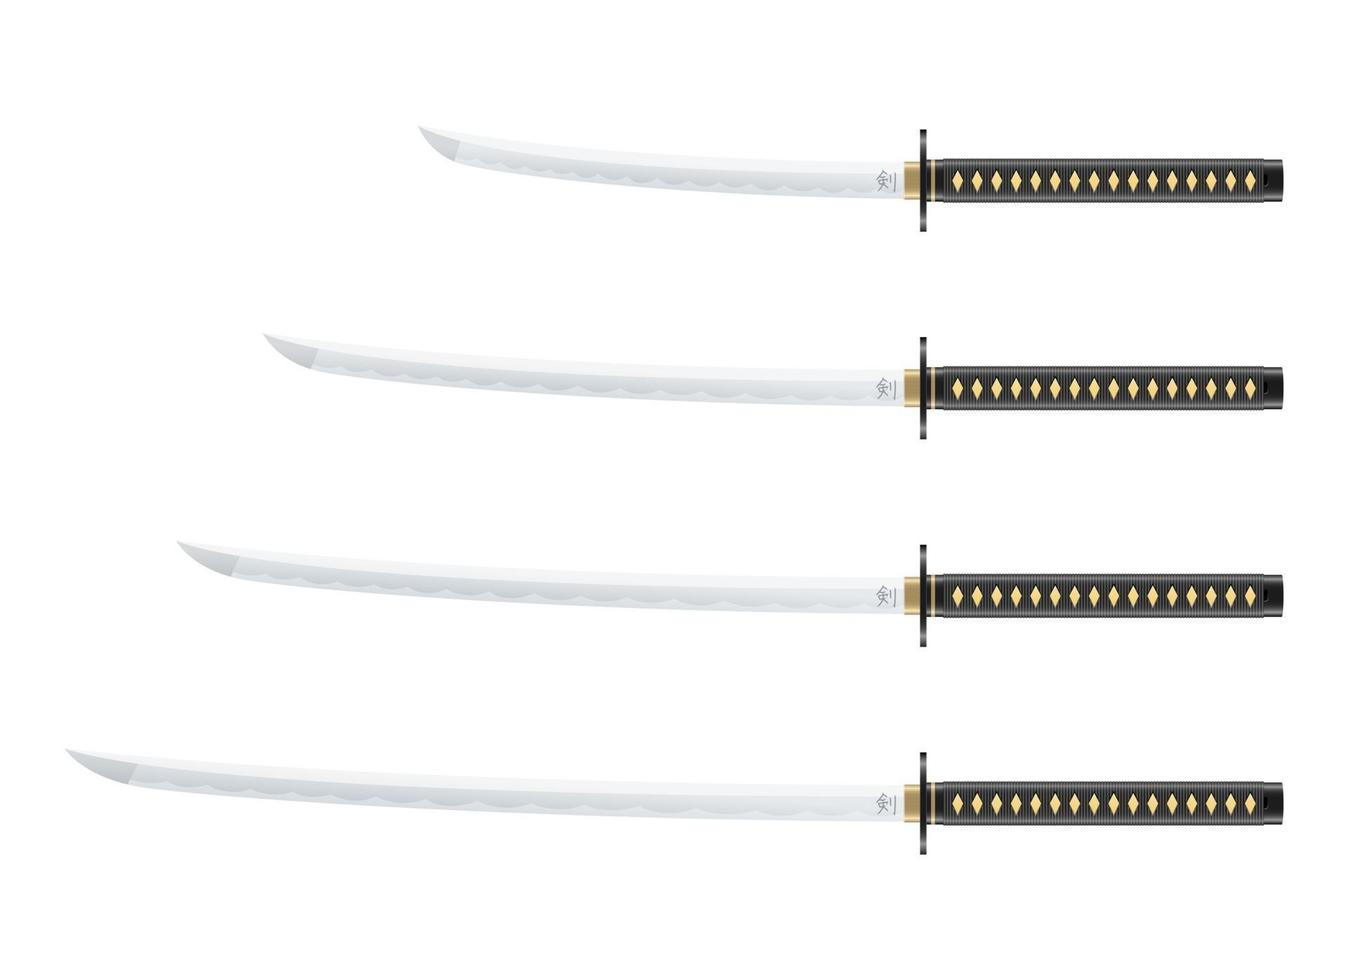 Katana sword vector design illustration isolated on white background